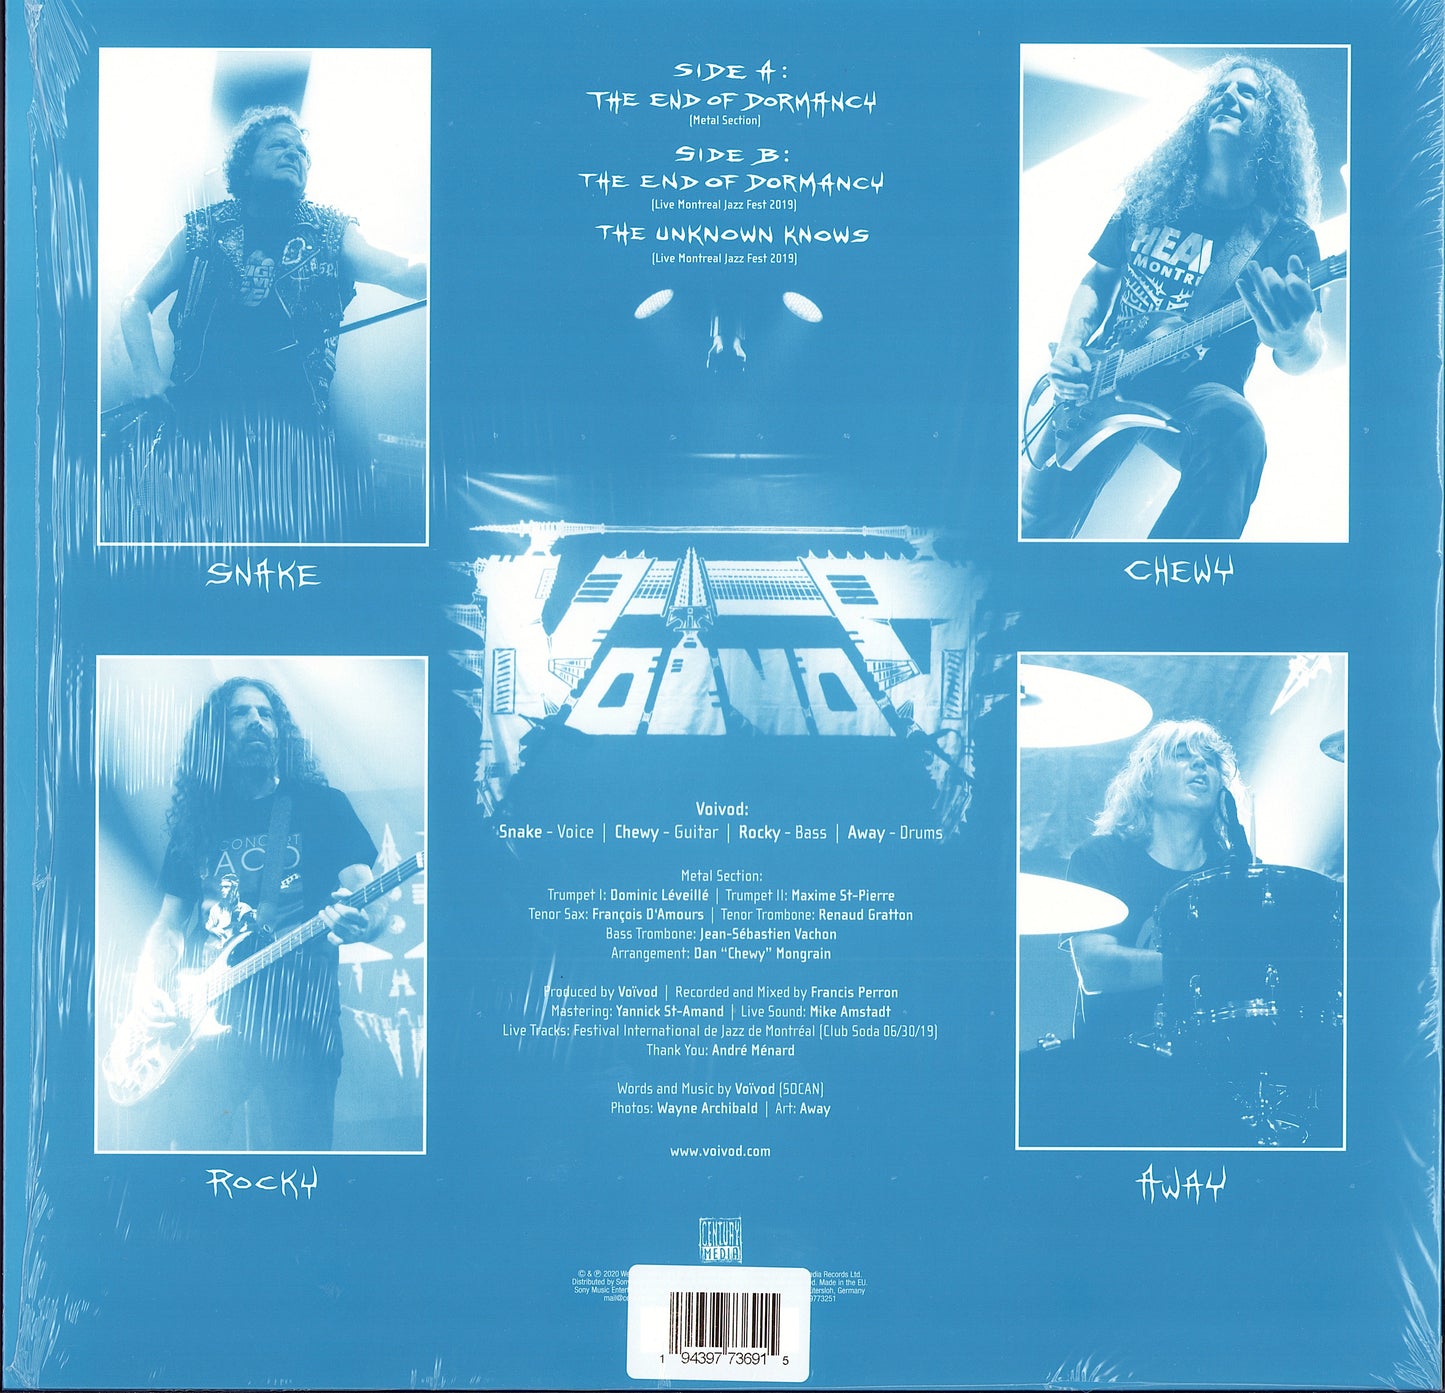 Voïvod - The End Of Dormancy Blue Light Vinyl 12" EP Limited Edition